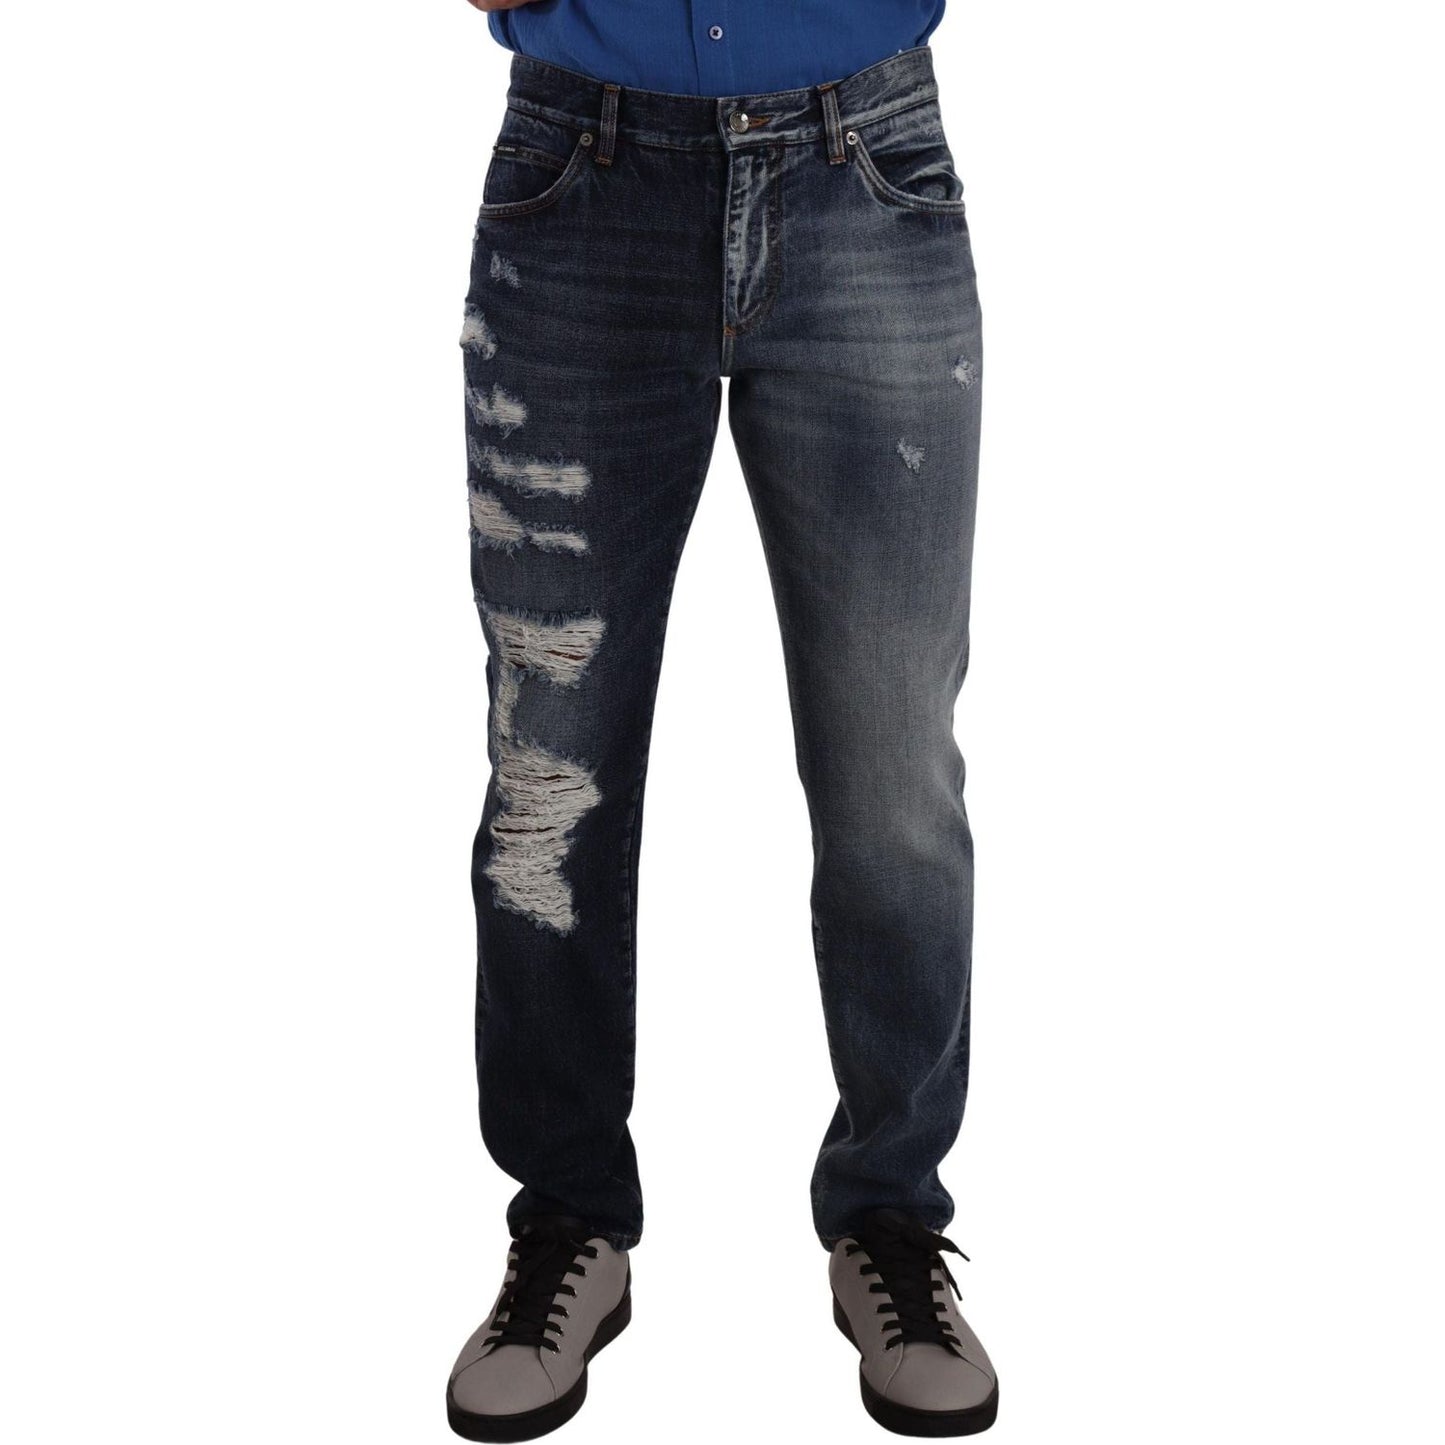 Dolce & Gabbana Chic Tattered Denim Jeans blue-cotton-regular-denim-trousers-jeans IMG_7045-scaled-7fb0ec07-baf.jpg